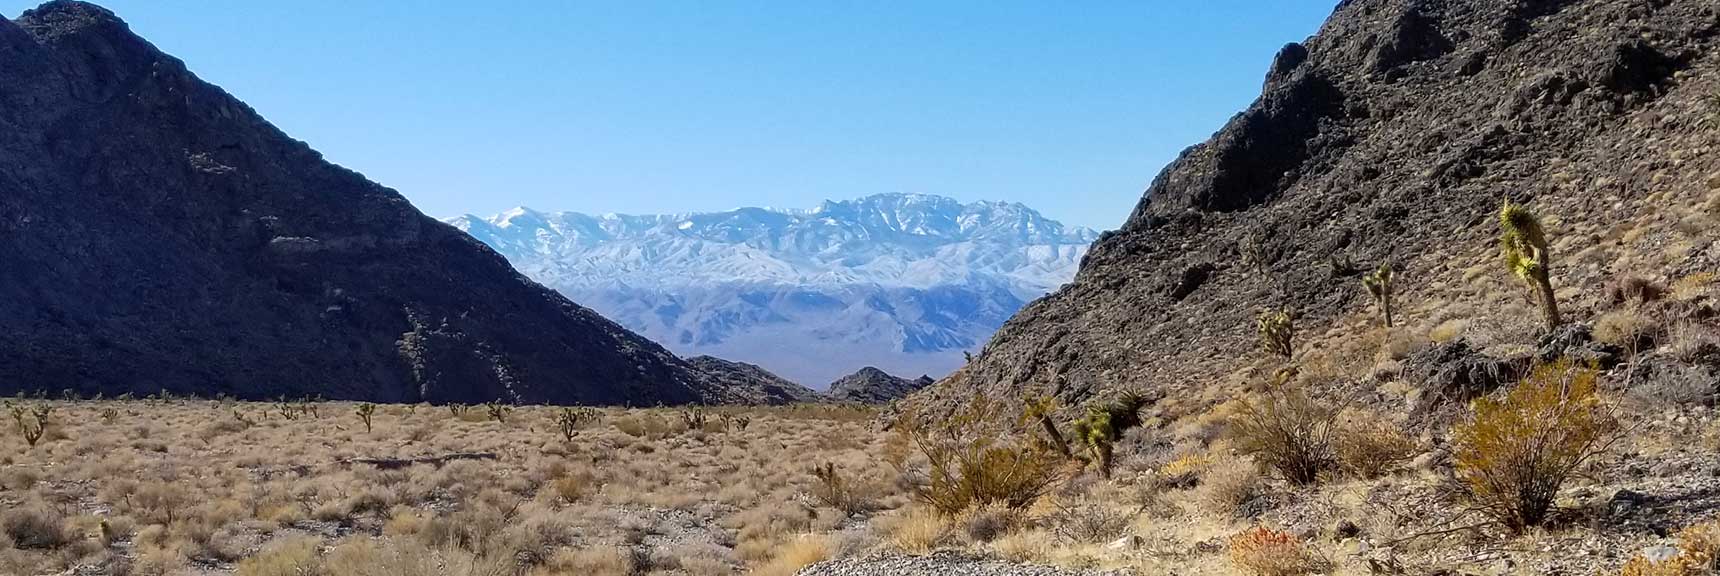 View Down the Sheep Range / Fossil Ridge Pass in the Desert National Wildlife Refuge, Nevada